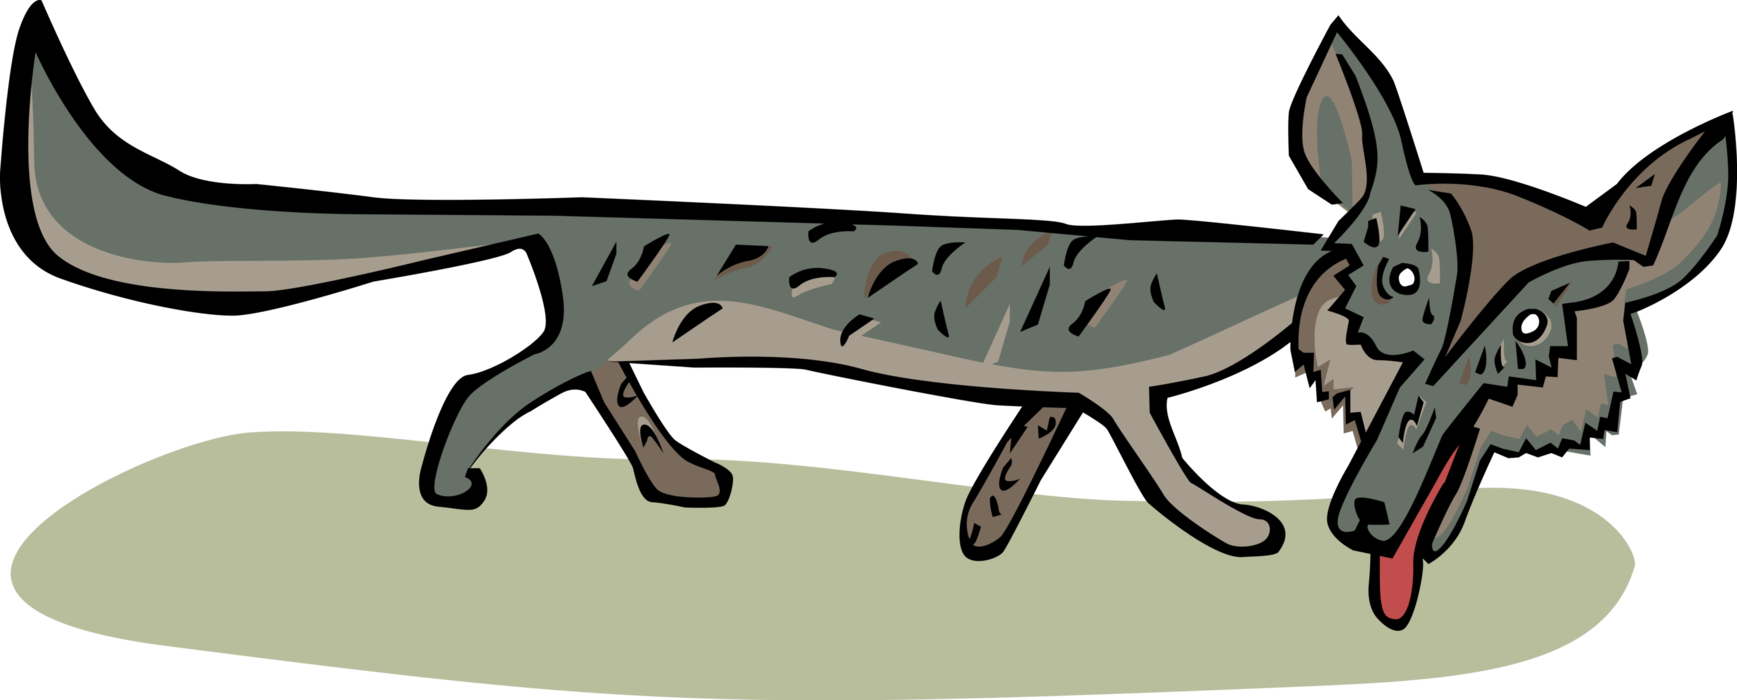 Vector Illustration of Omnivorous Mammal Fox or Wolf